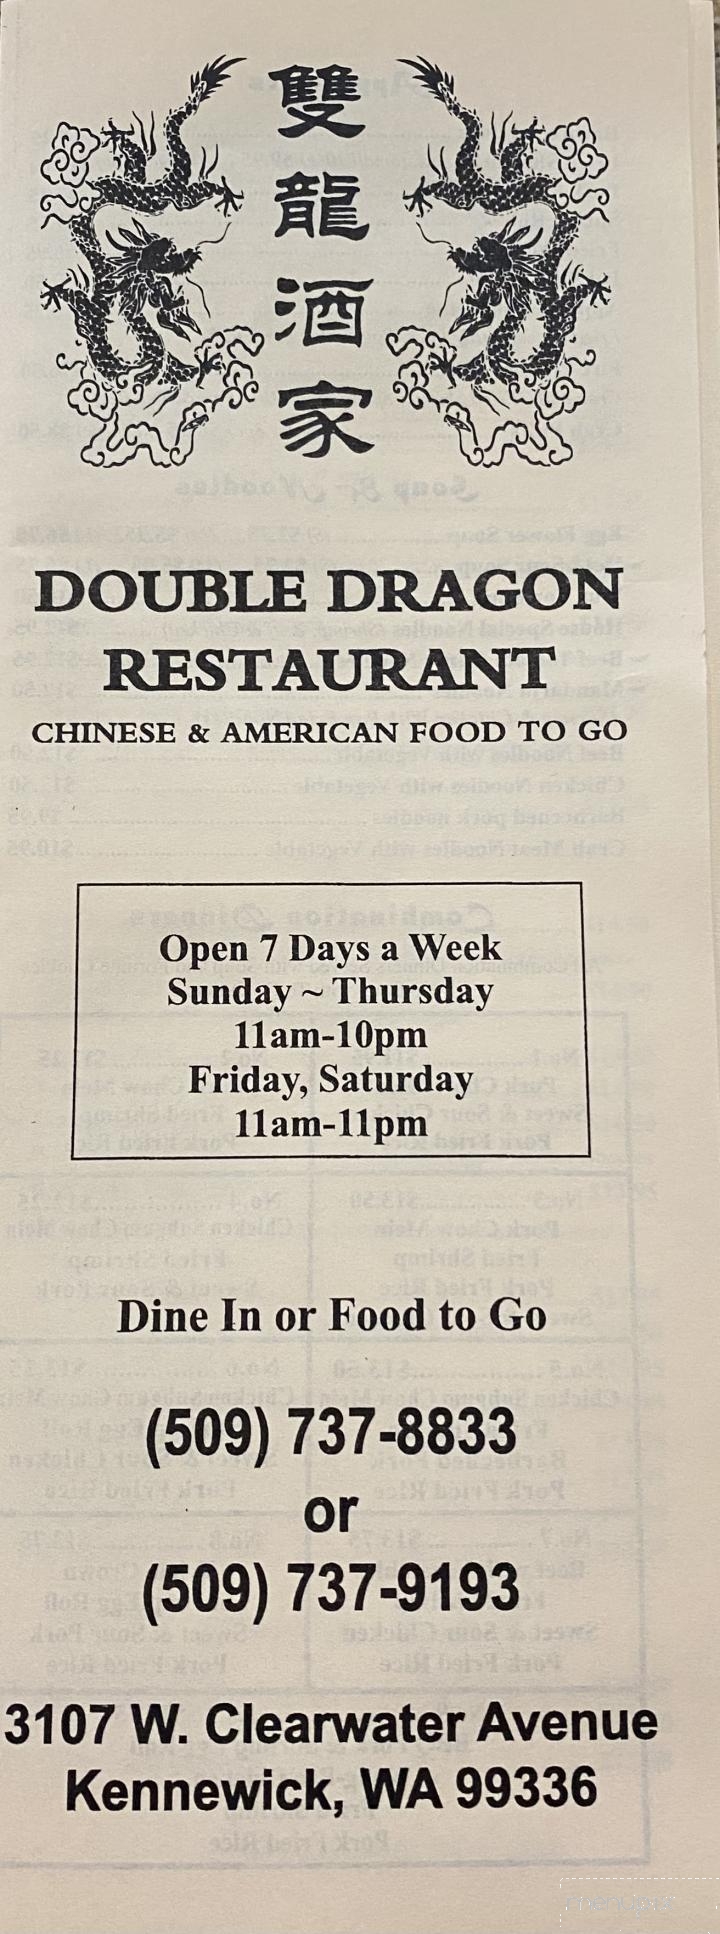 Double Dragon Restaurant - Kennewick, WA